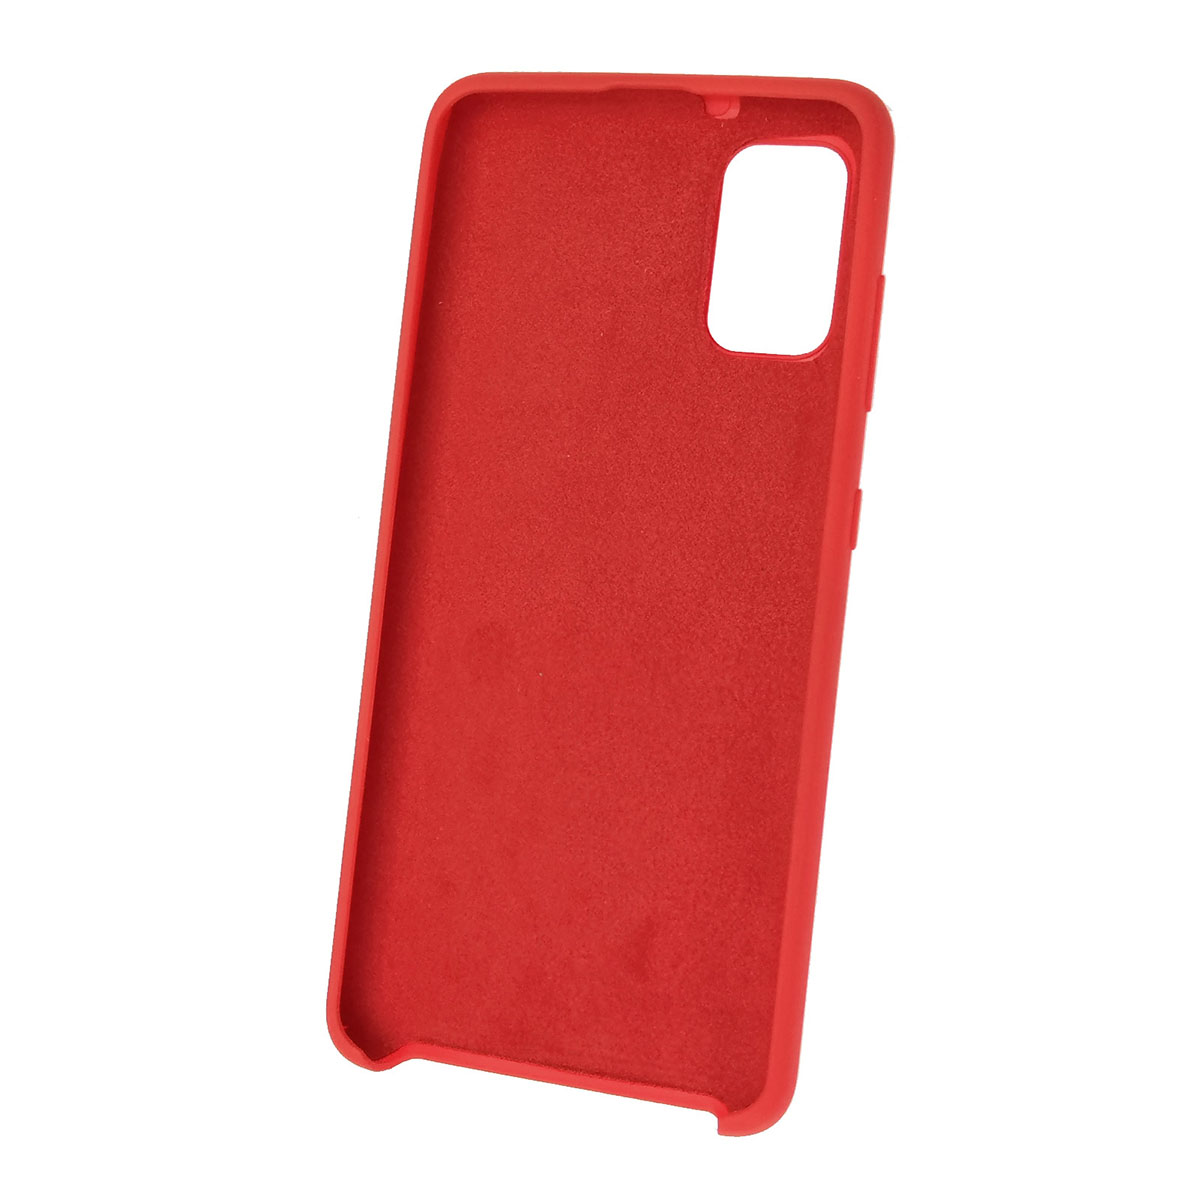 Чехол накладка Silicon Cover для SAMSUNG Galaxy A41 (SM-A415), силикон, бархат, цвет красный